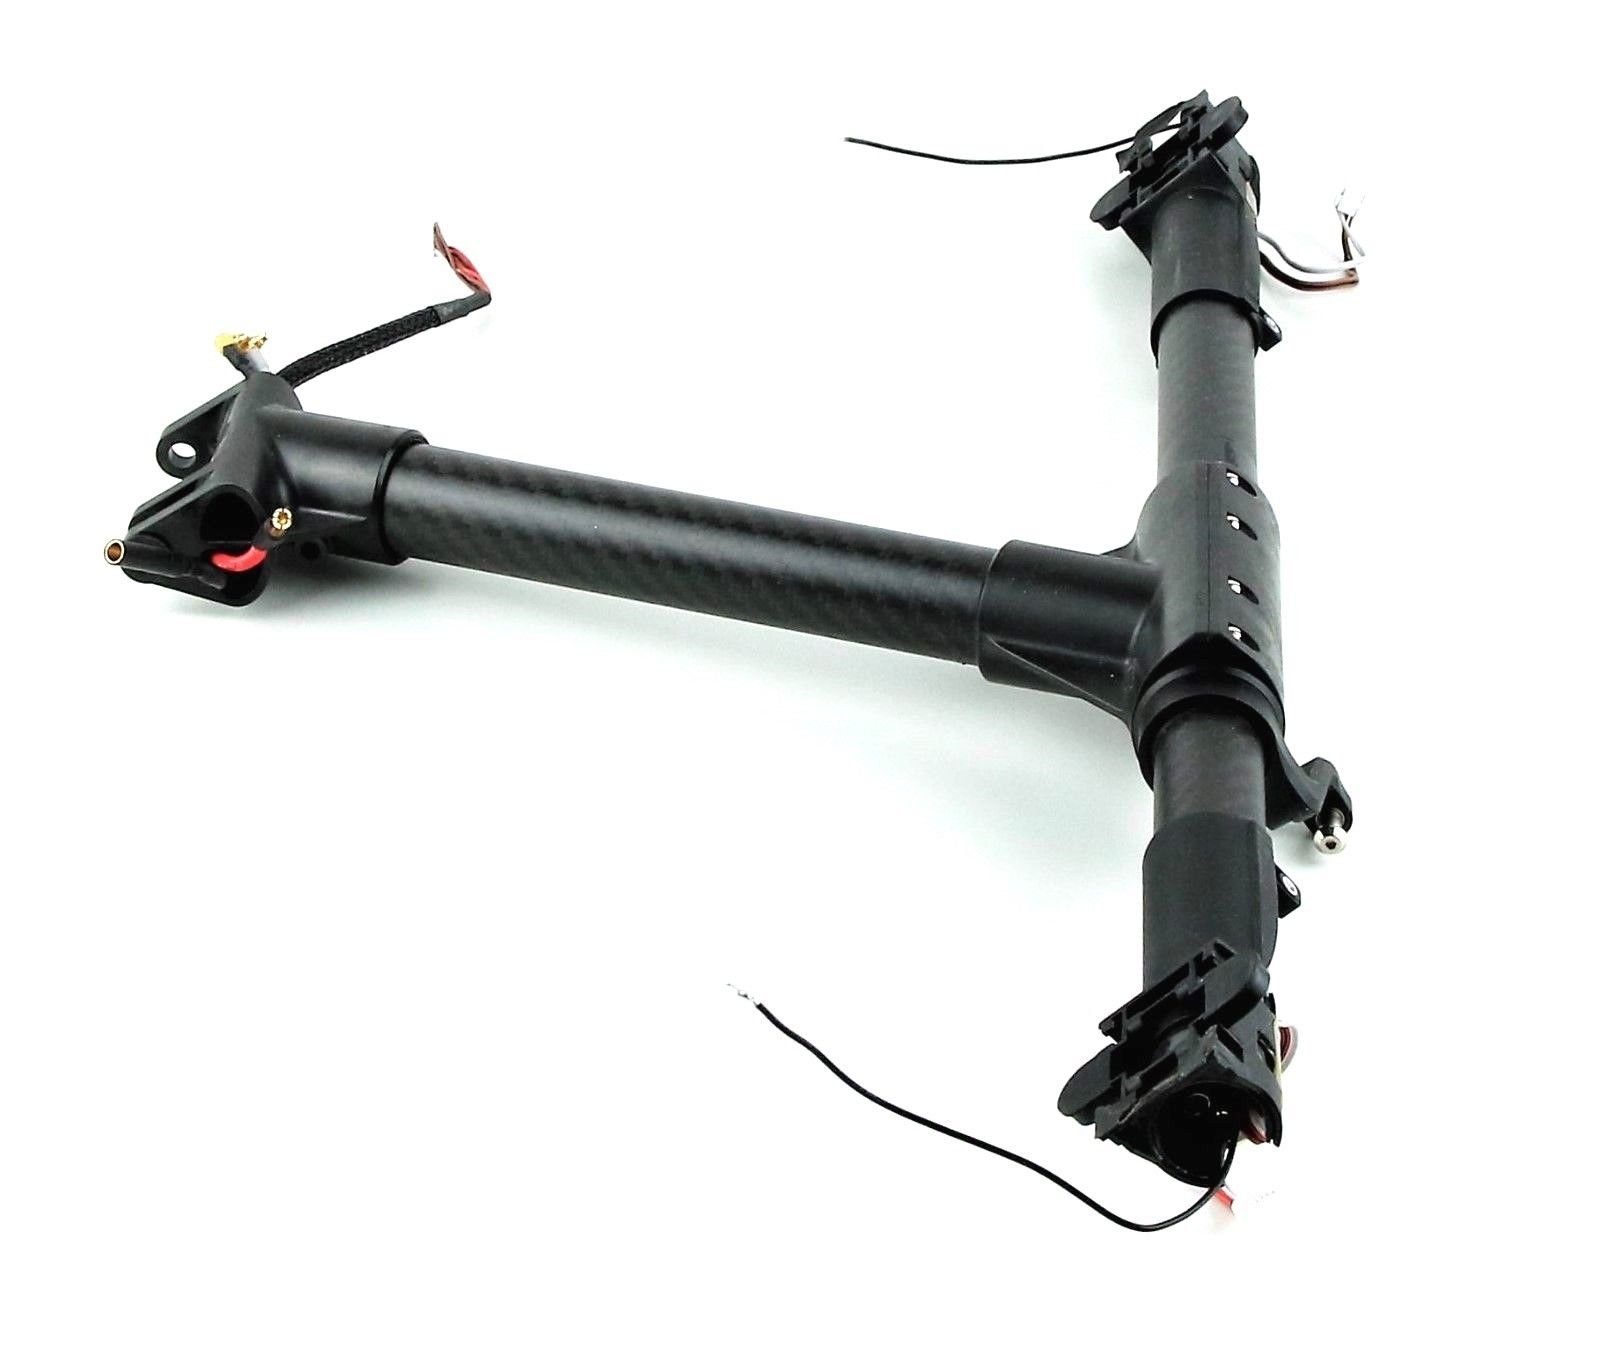 DJI DJI Inspire 1 - T600 linker Arm (Set) (Neu) Zubehör Drohne | Drohnen